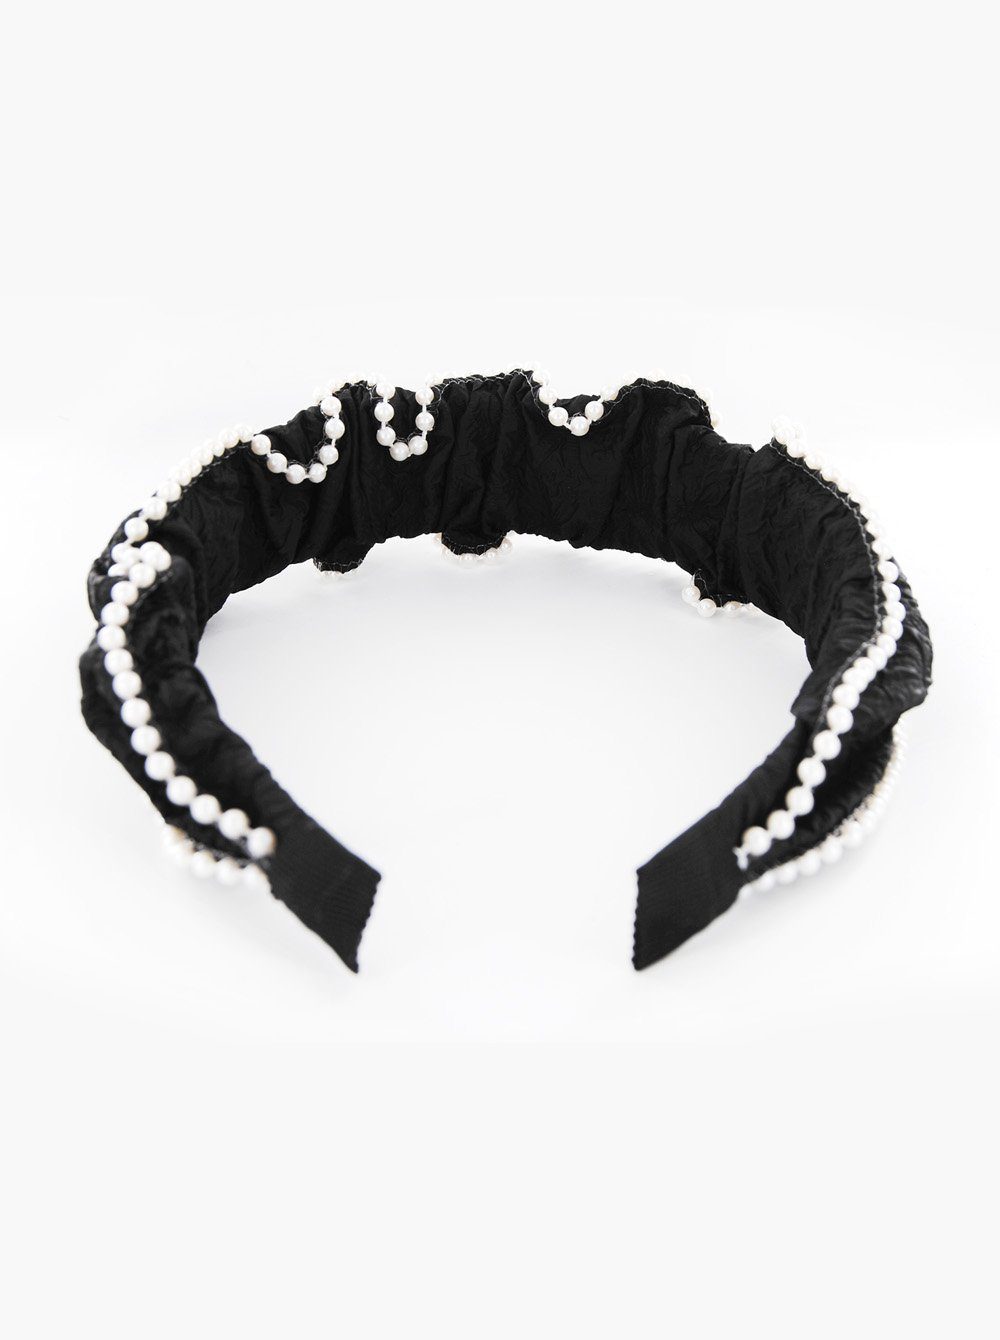 axy Haarreif Schwarz Vintage Design, in Haarreif mit Haareifen Haarband modischem Damen Perlen